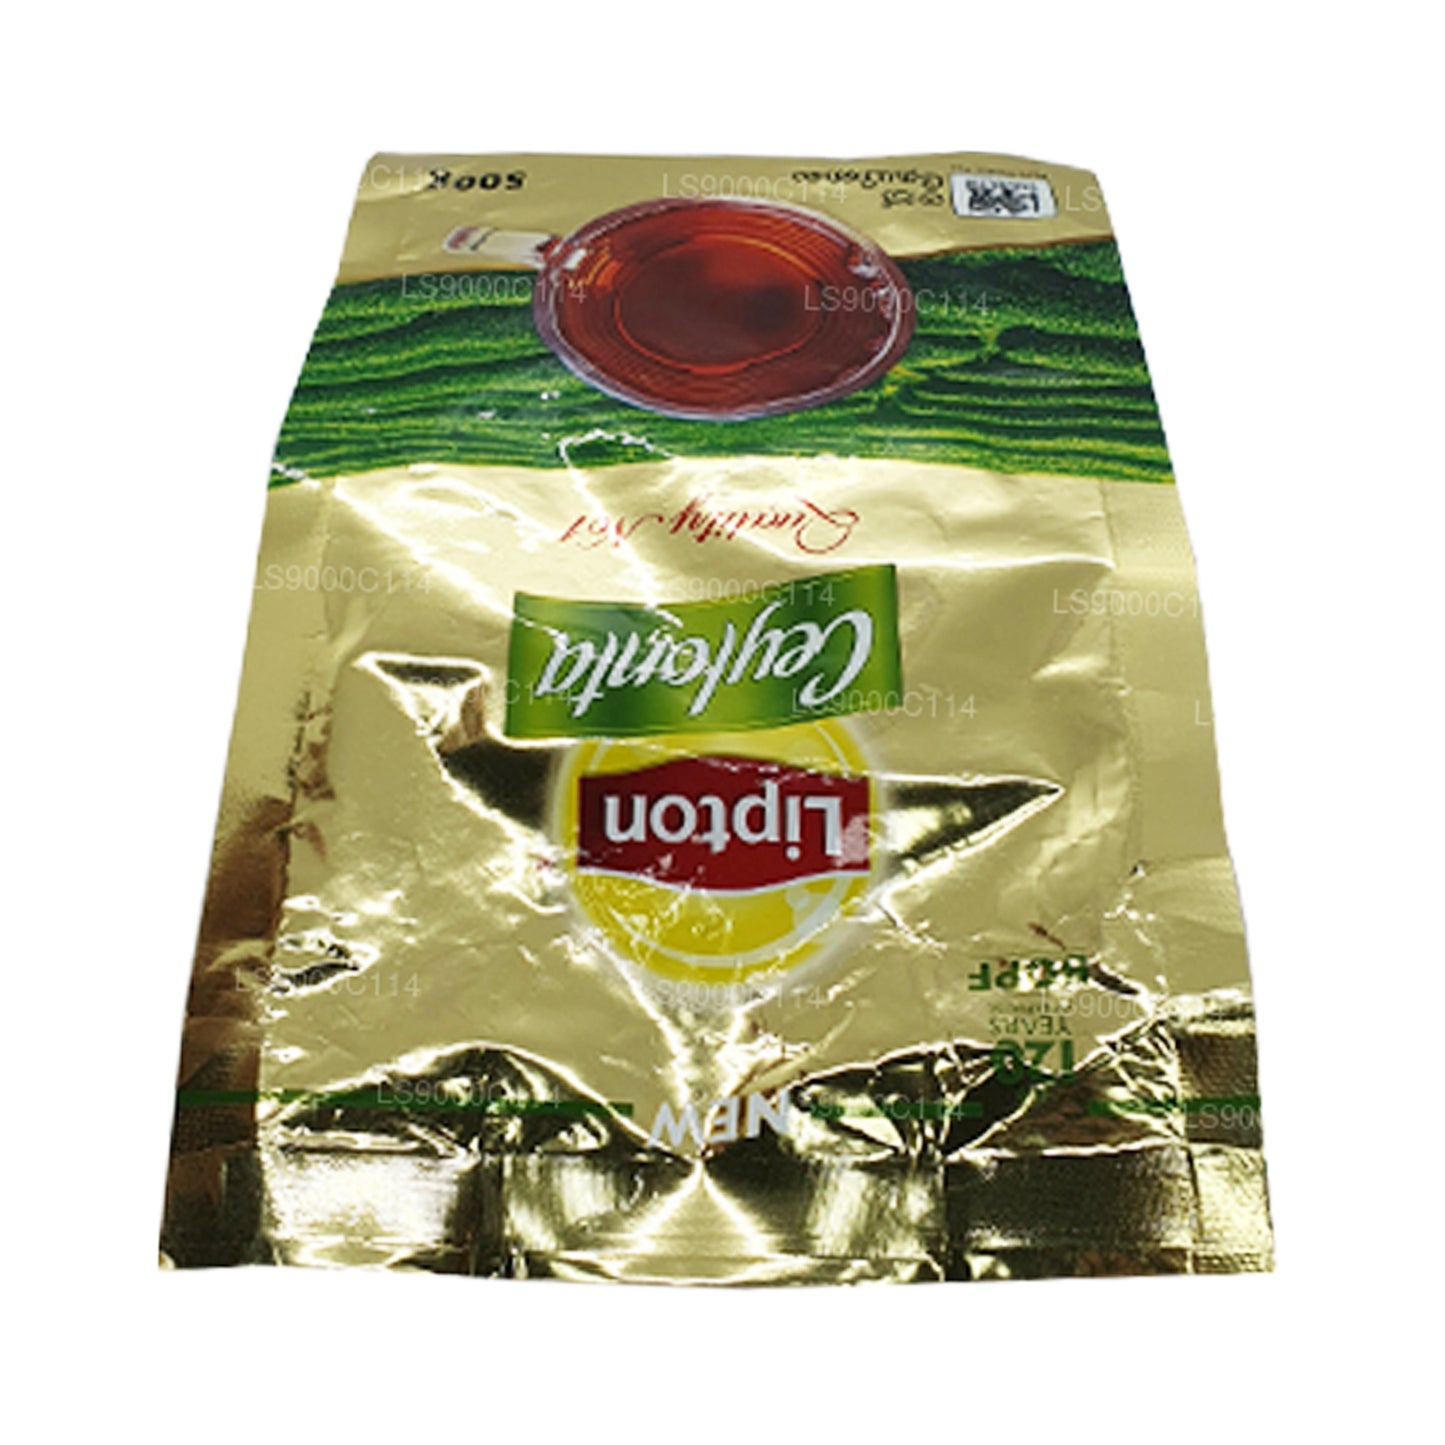 Lipton Ceylonta Tea Leaves (500g)